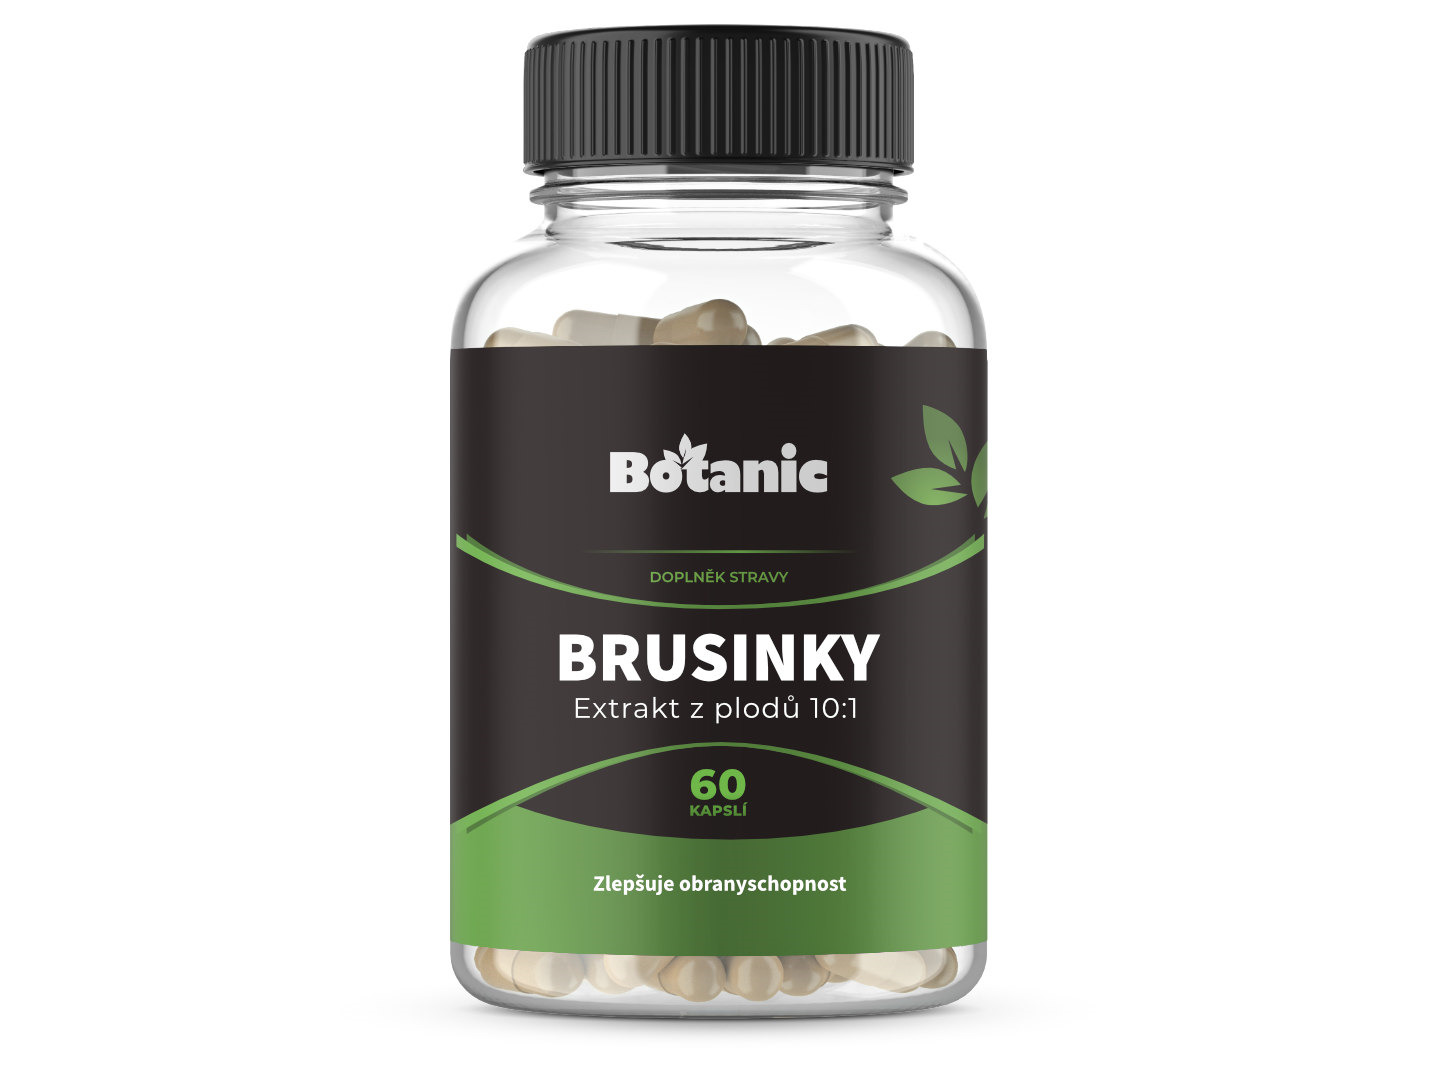 Botanic Brusinky - Extrakt z plodů 10:1 60kap.